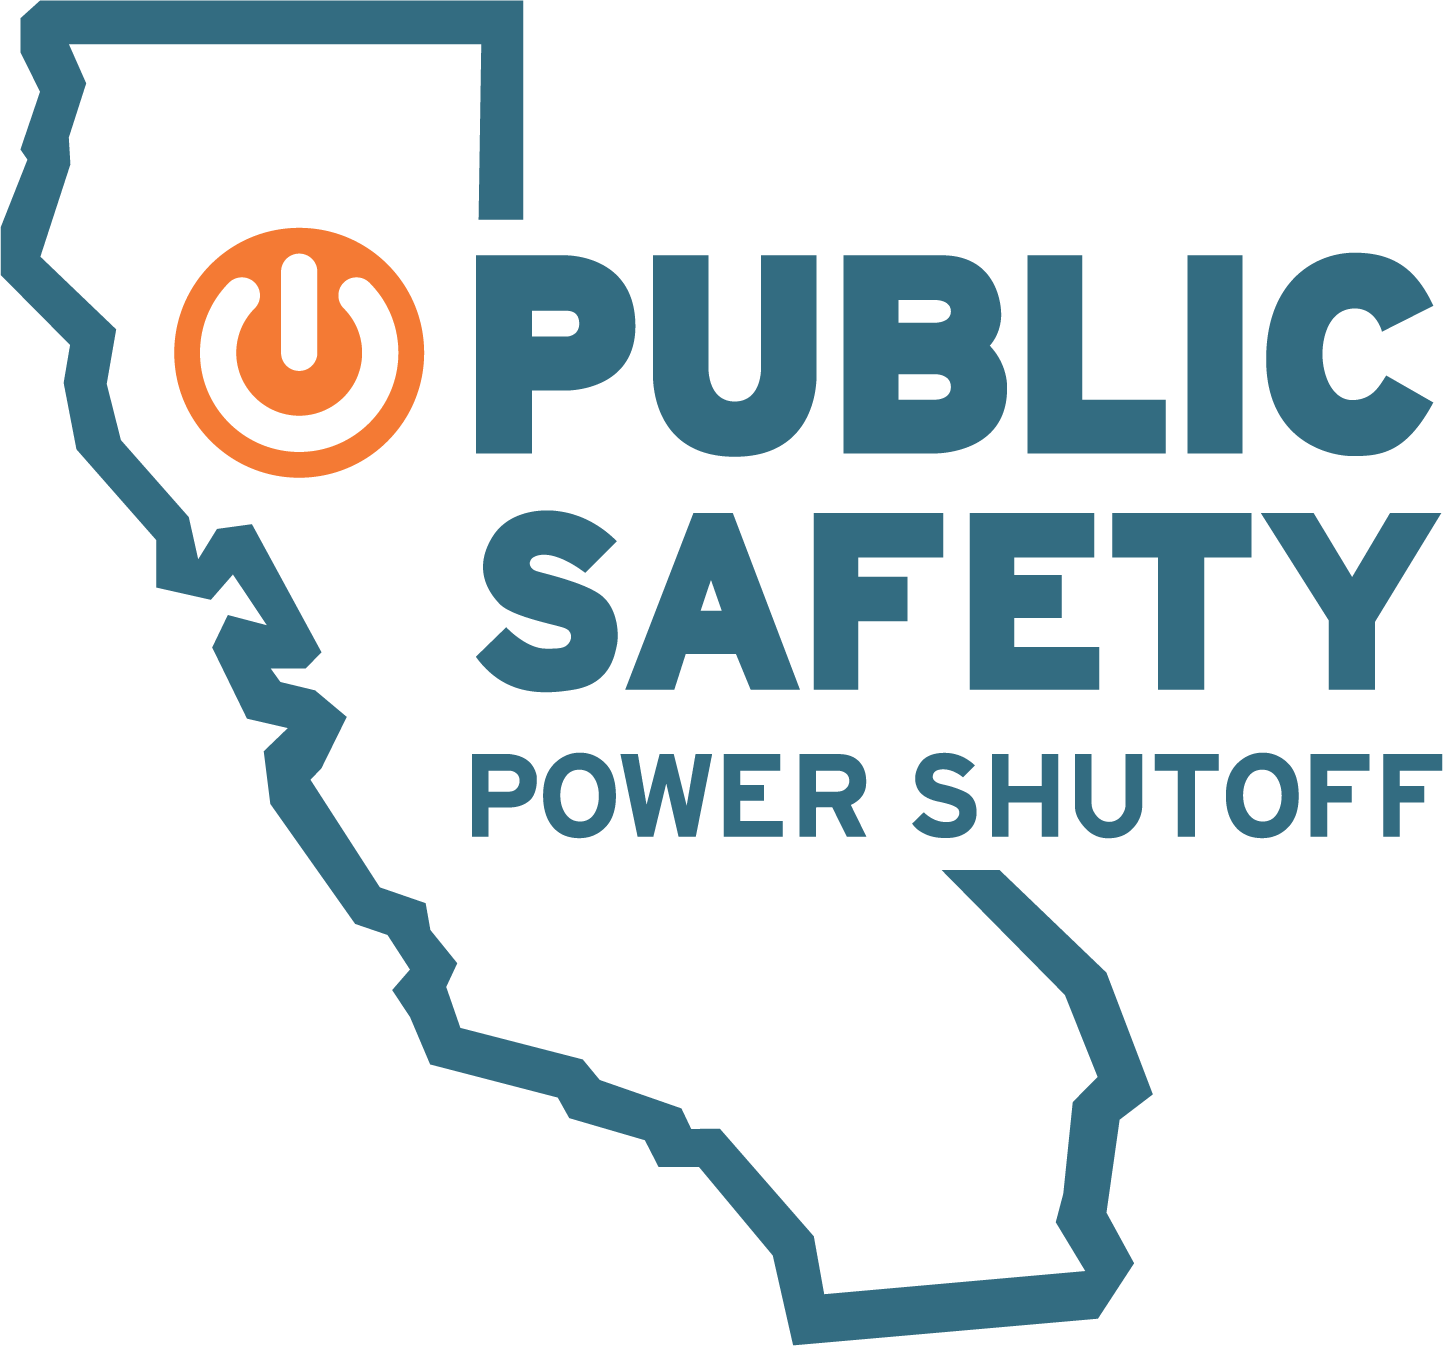 Prepare for Power Down – Public Safety Power Shutoff